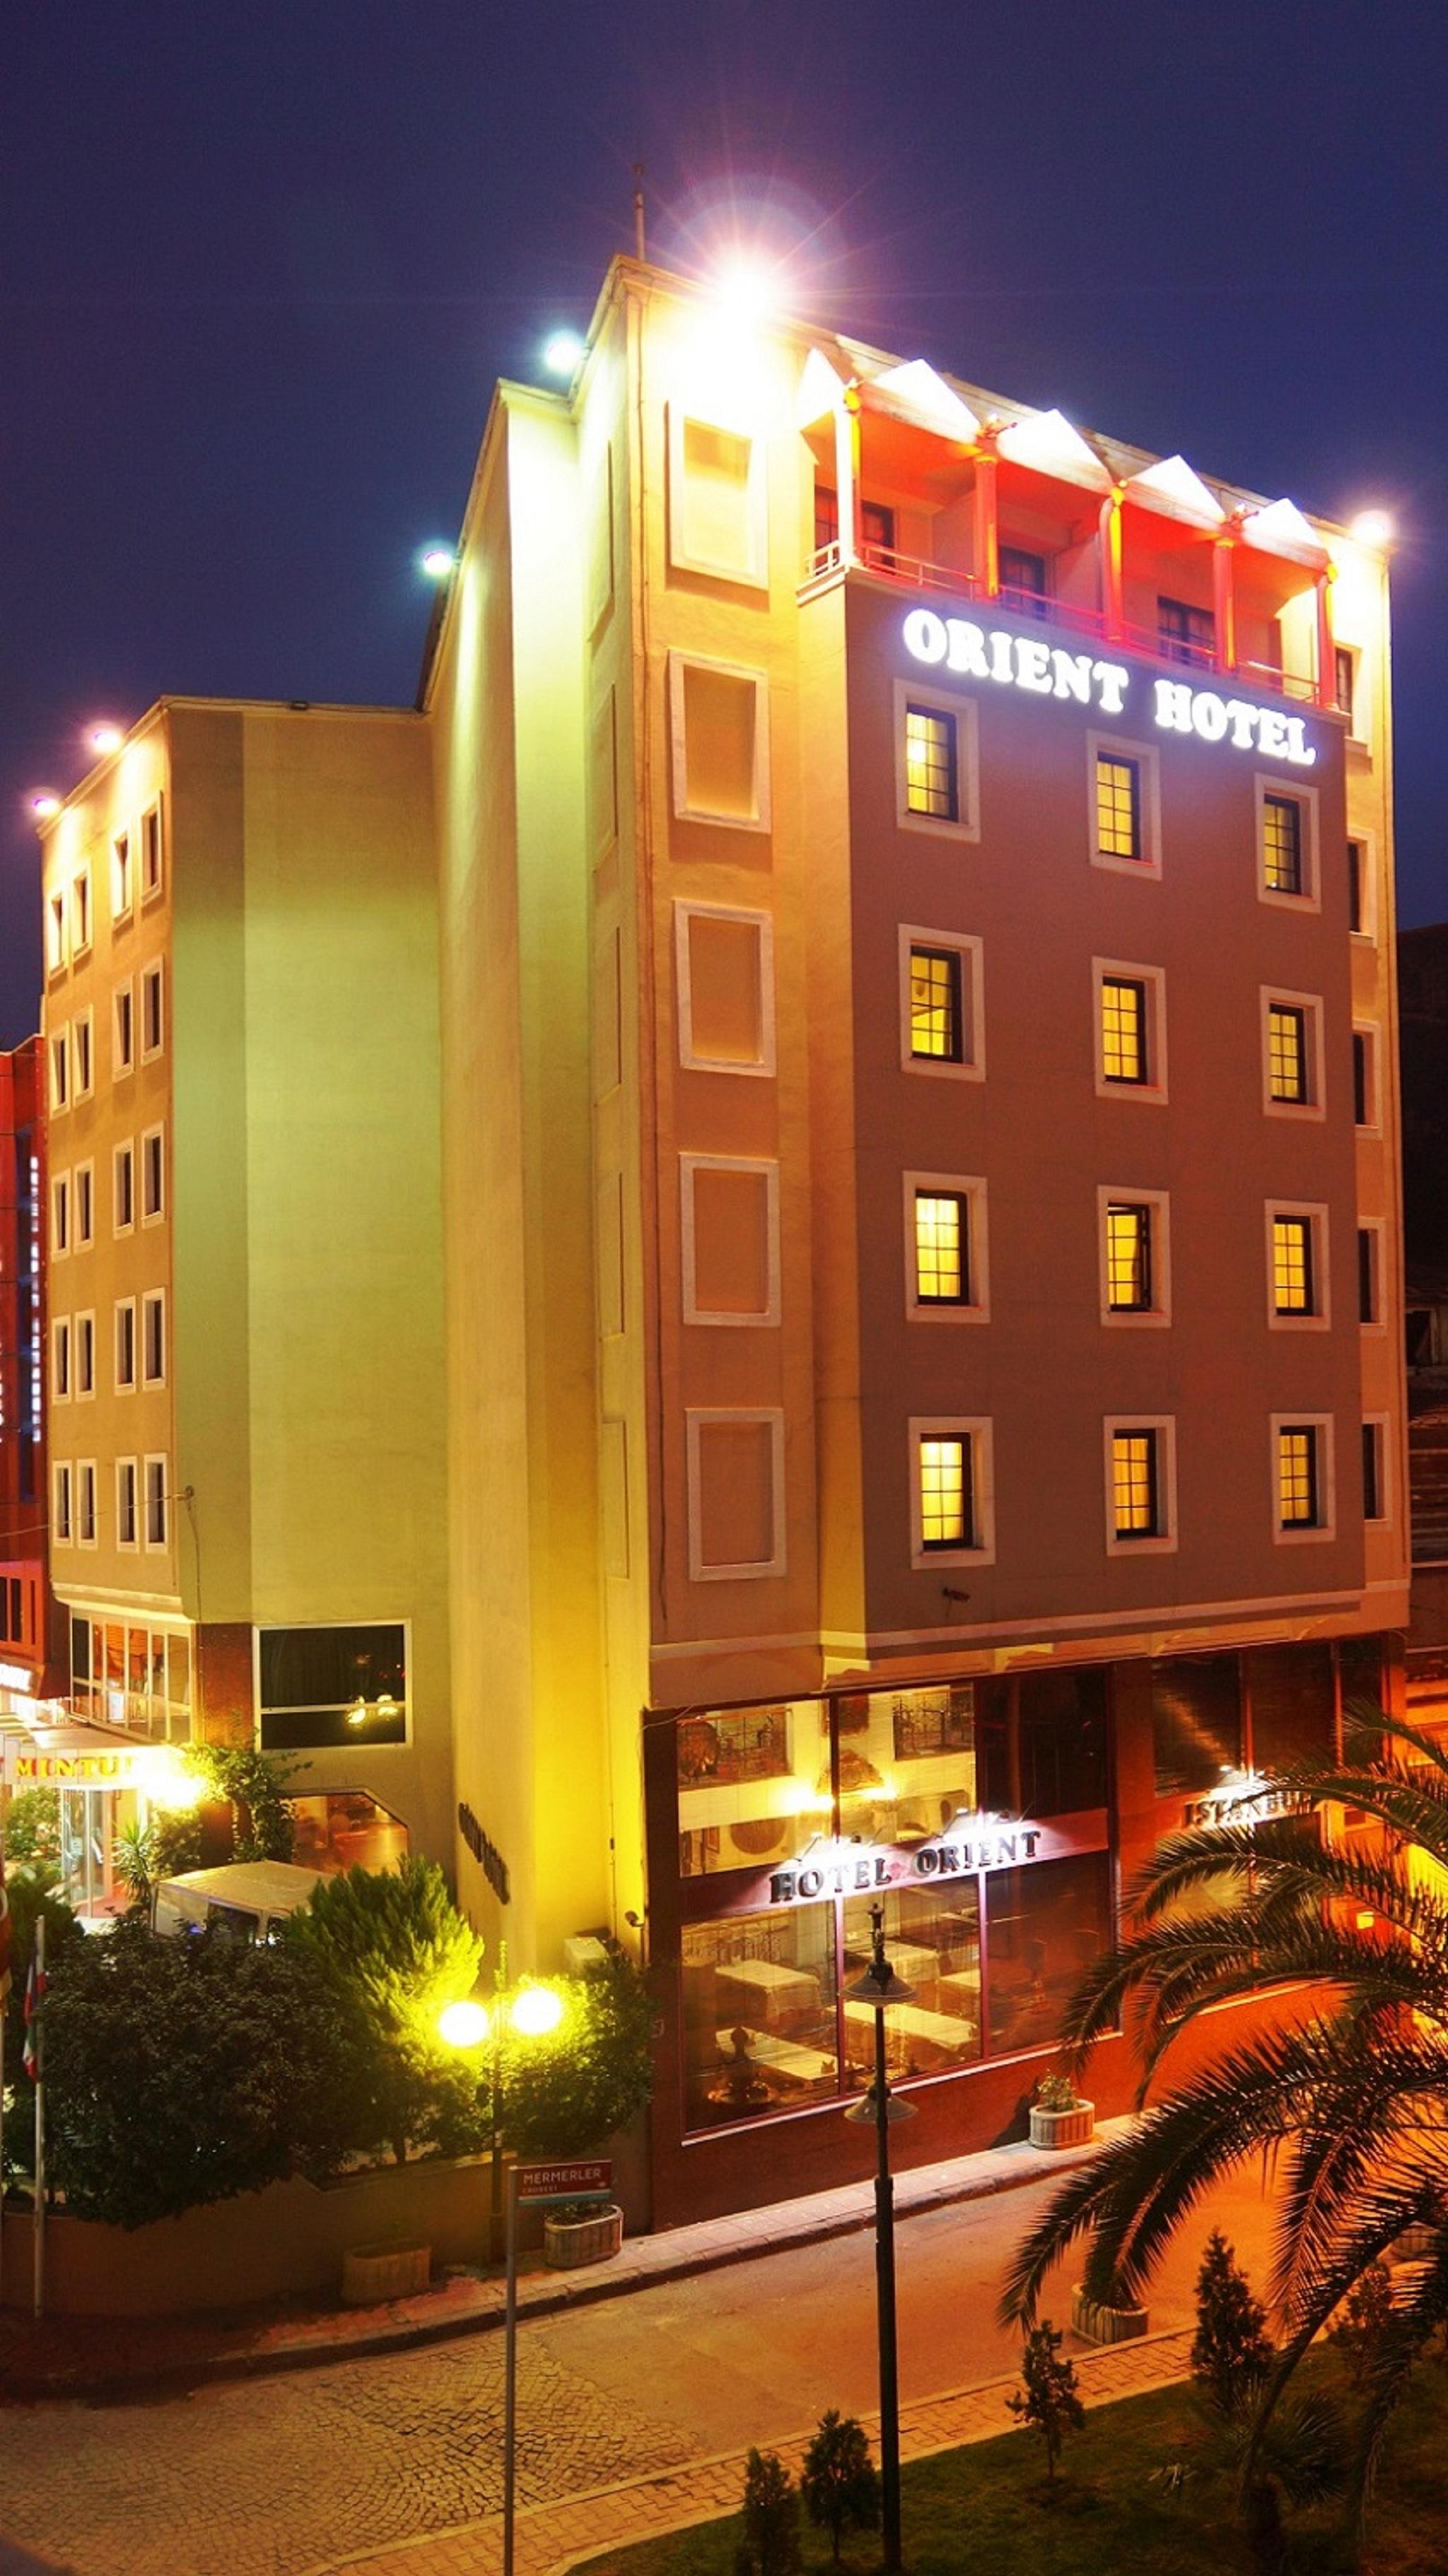 Orient Mintur Hotel in Istanbul, Turkey